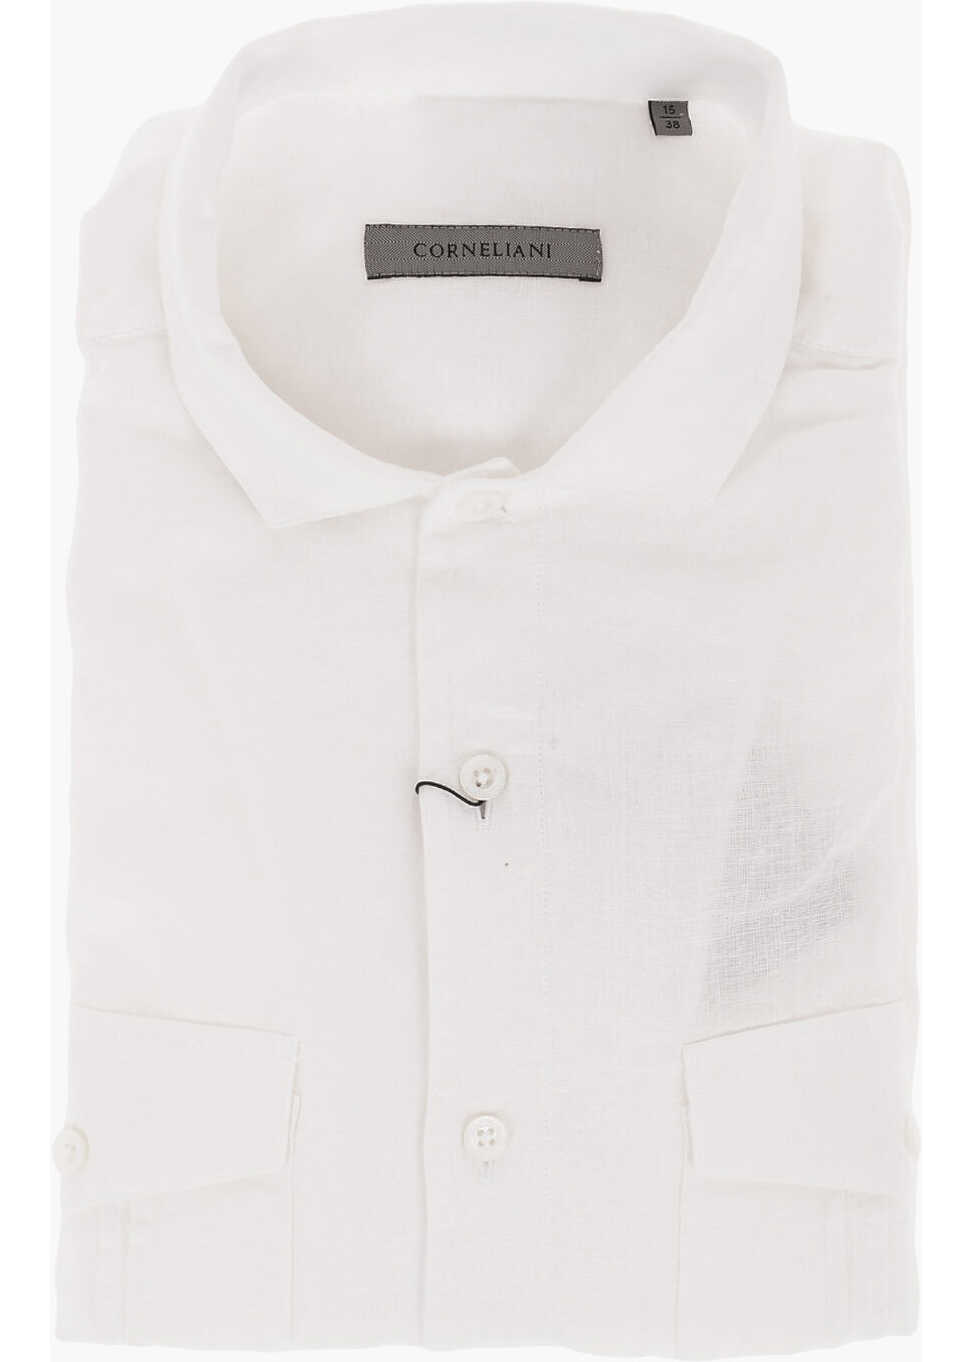 CORNELIANI Short-Sleeved Flax Shirt With Utility Pockets White